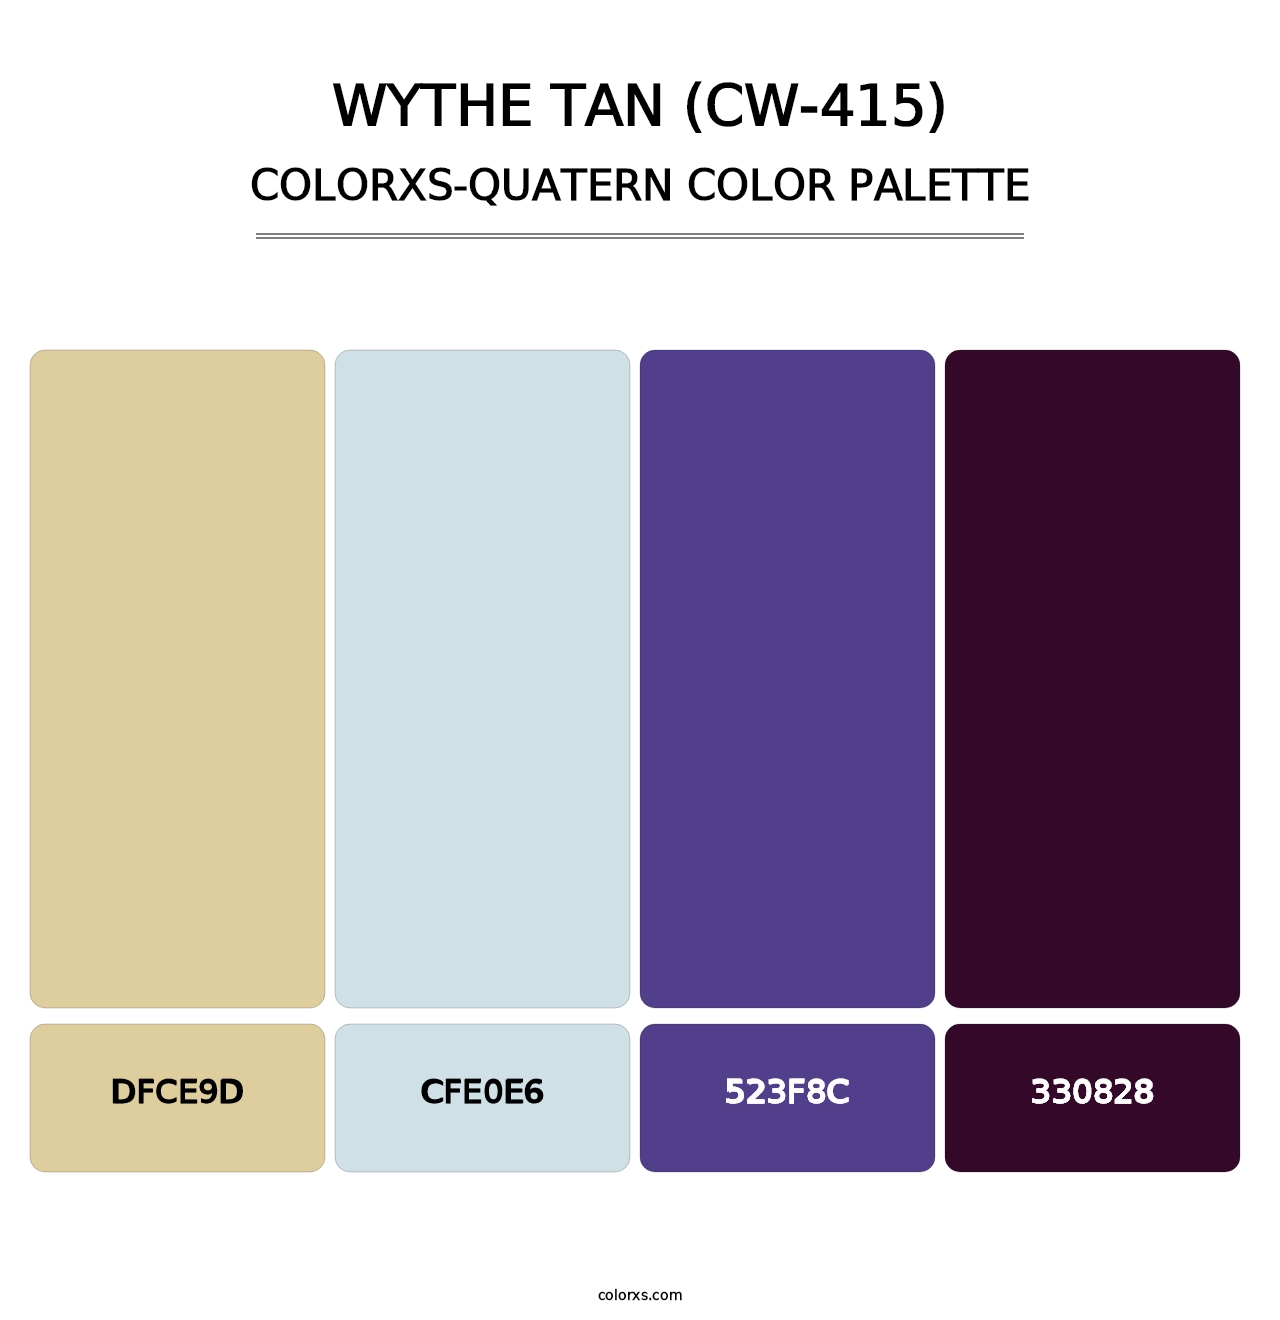 Wythe Tan (CW-415) - Colorxs Quatern Palette